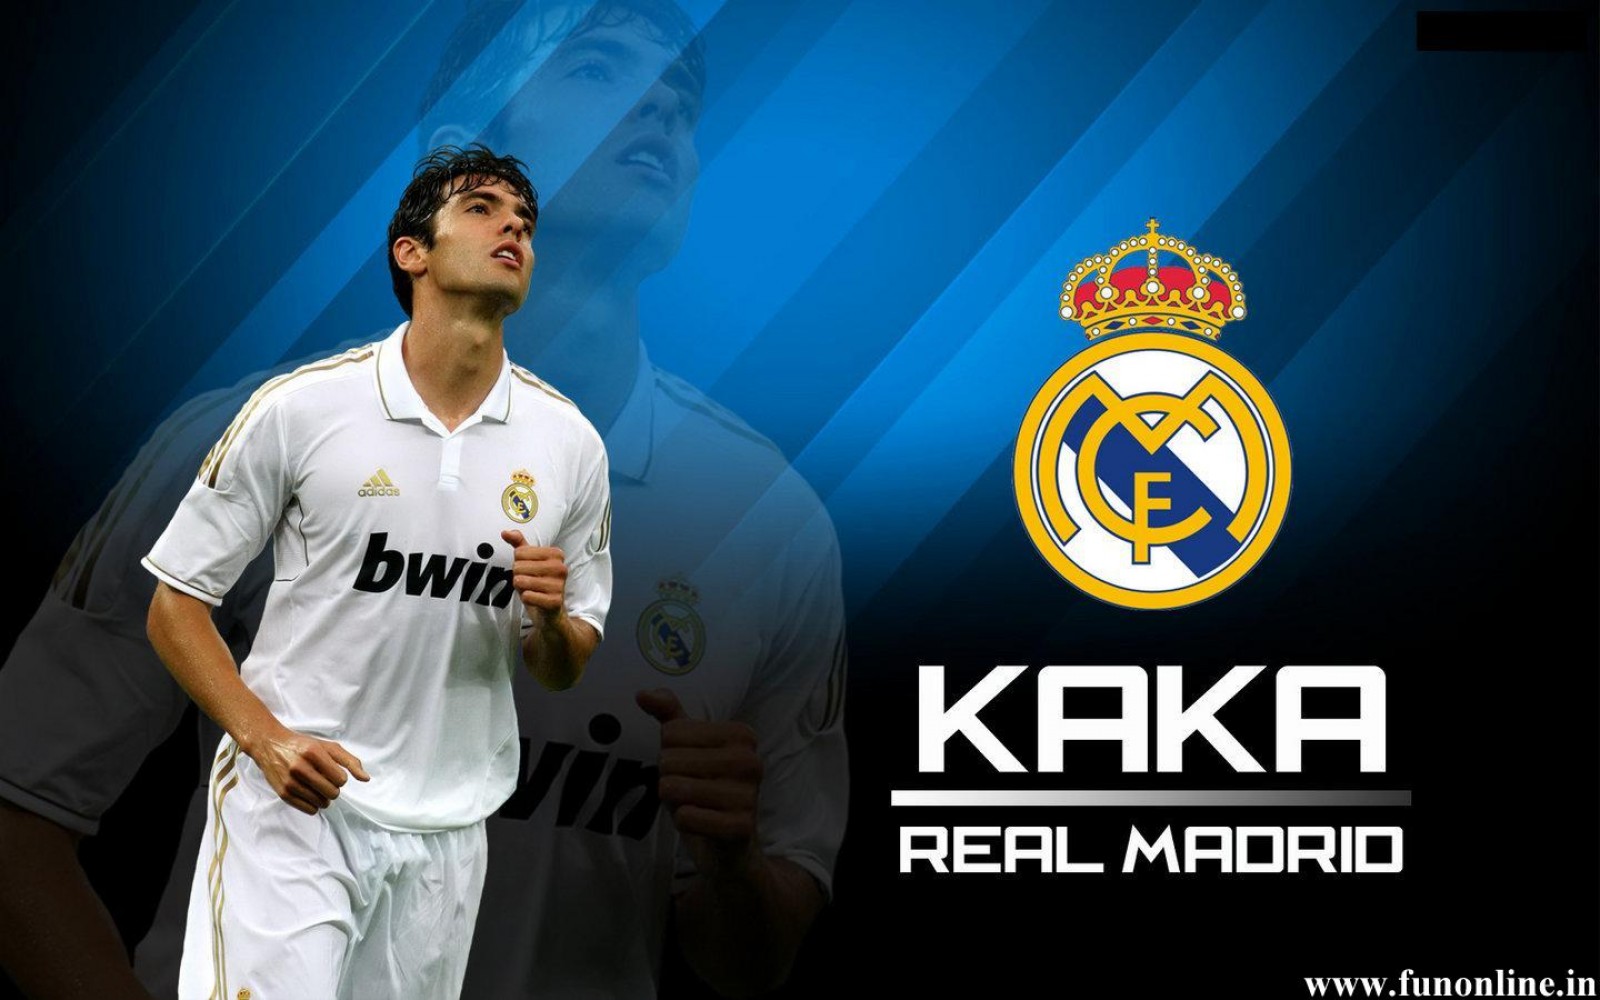 Ricardo Kaka Real Madrid Desktop Wallpaper